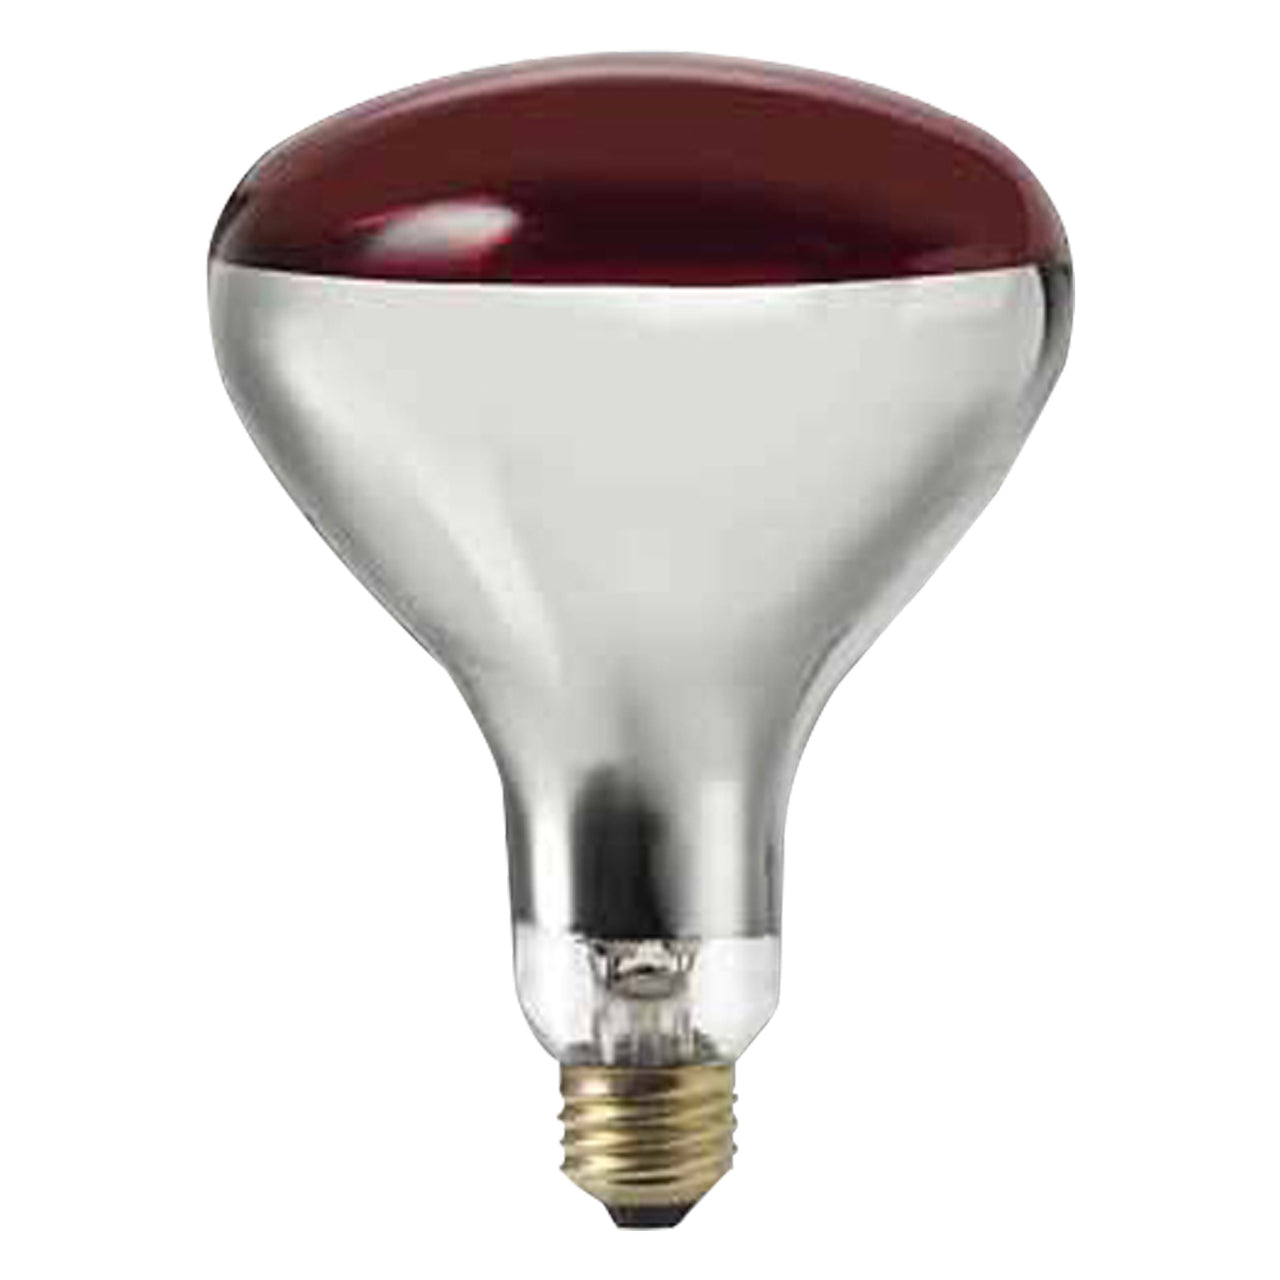 Canarm R40 250W Red Heat Lamp Bulb - Lamps Warming Lamps Canarm Canarm - Canada